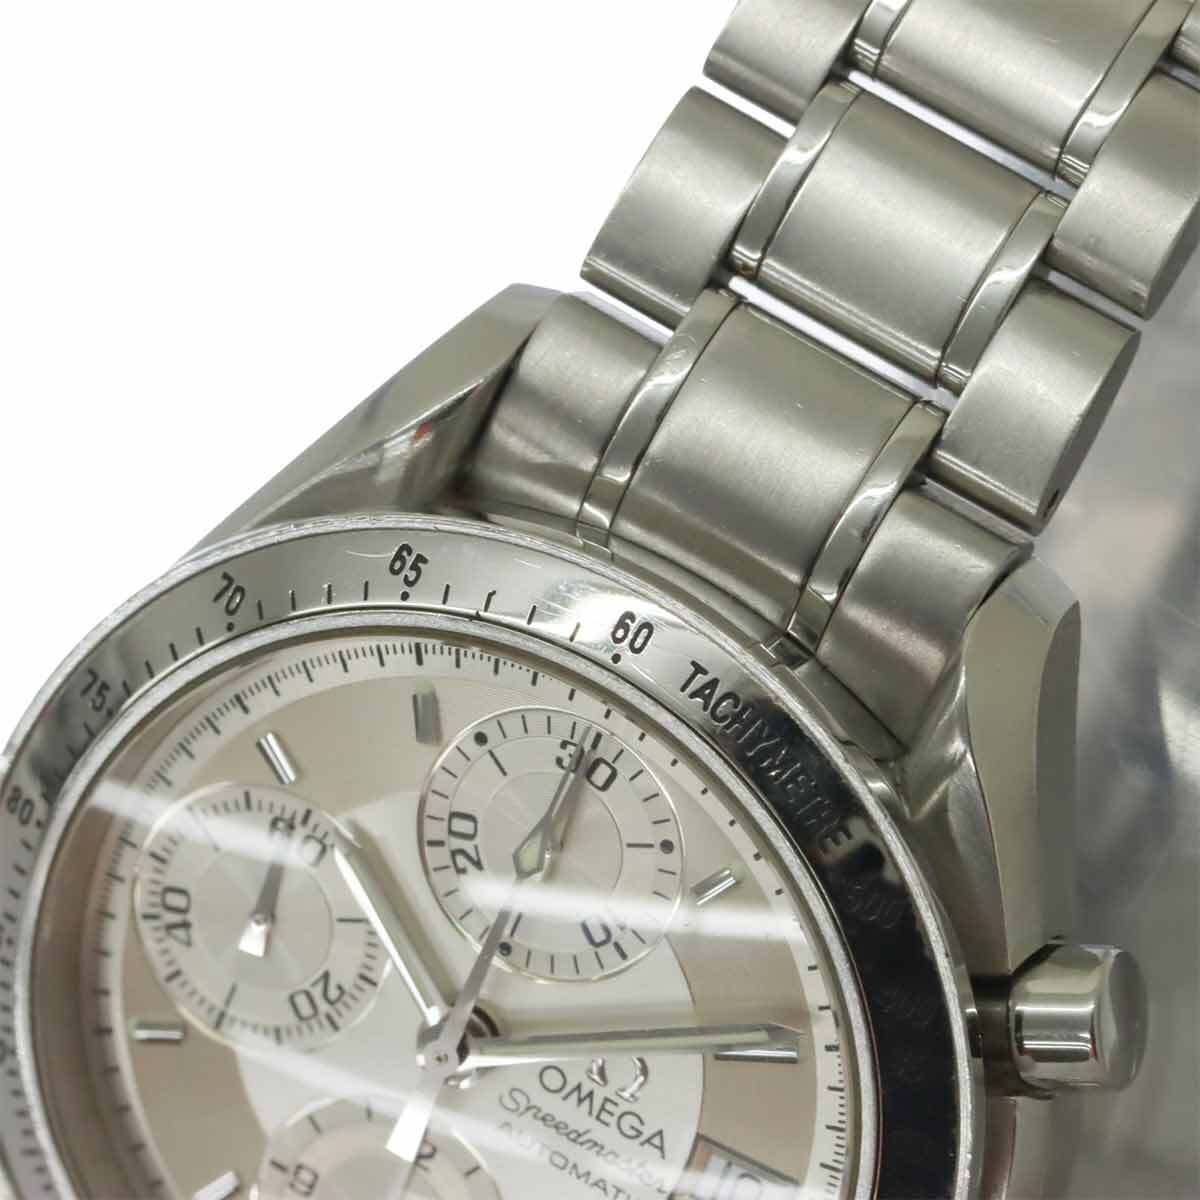  Omega OMEGA Speedmaster Date 3513 30 chronograph men's wristwatch silver face AT self-winding watch Speedmaster 90230158